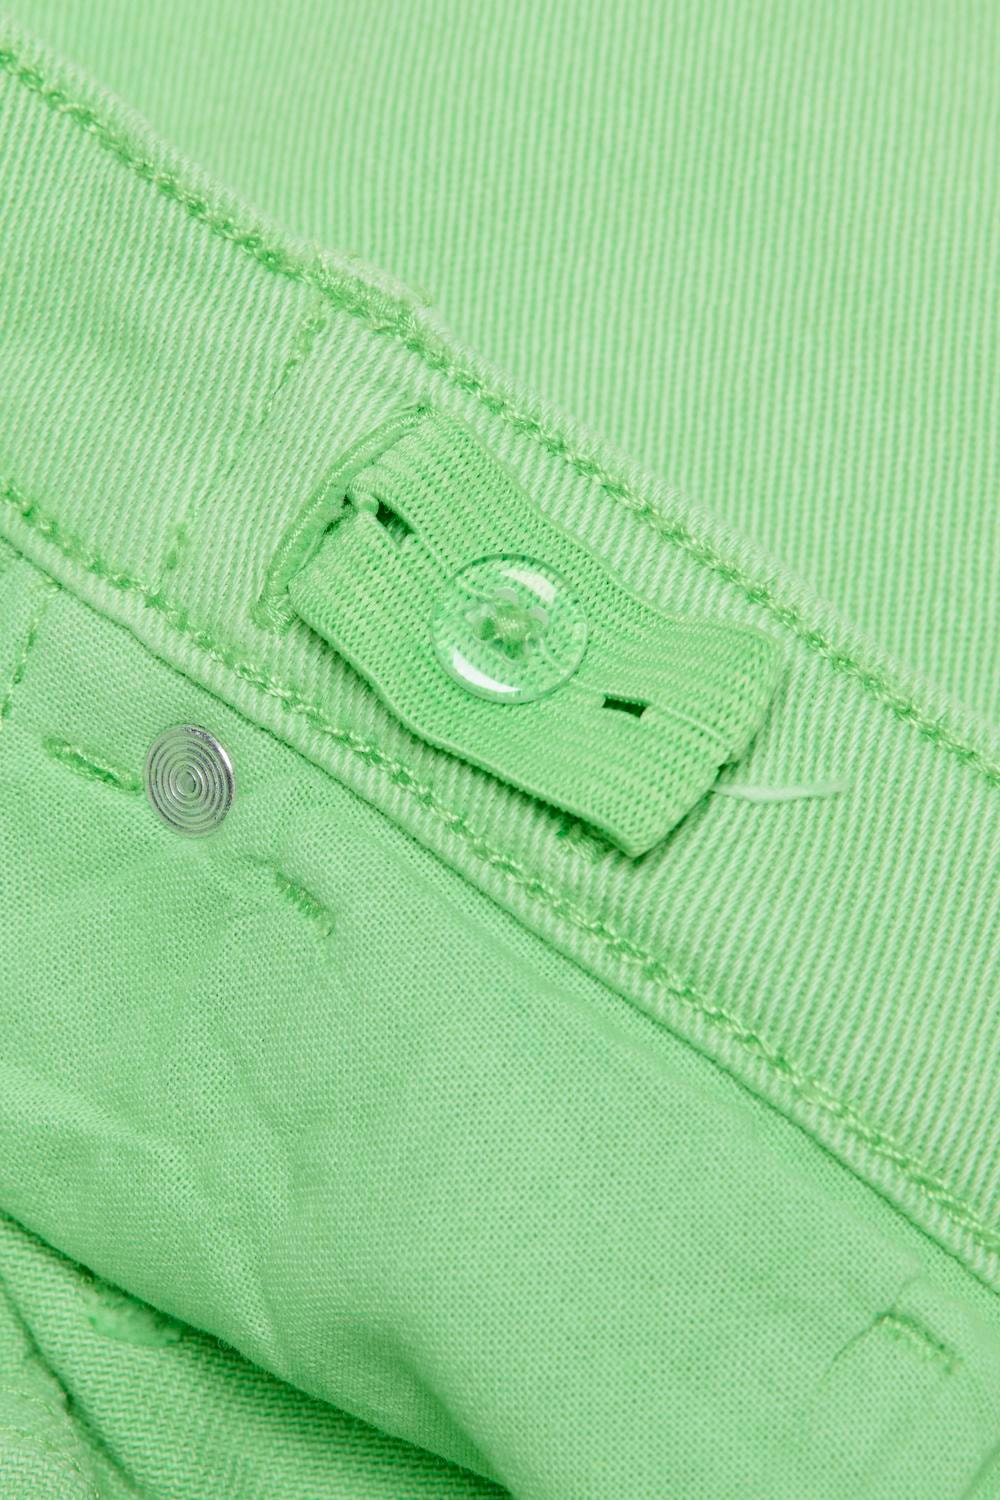 ONLY Pantalones Corte straight Cintura normal -Summer Green - 15273900